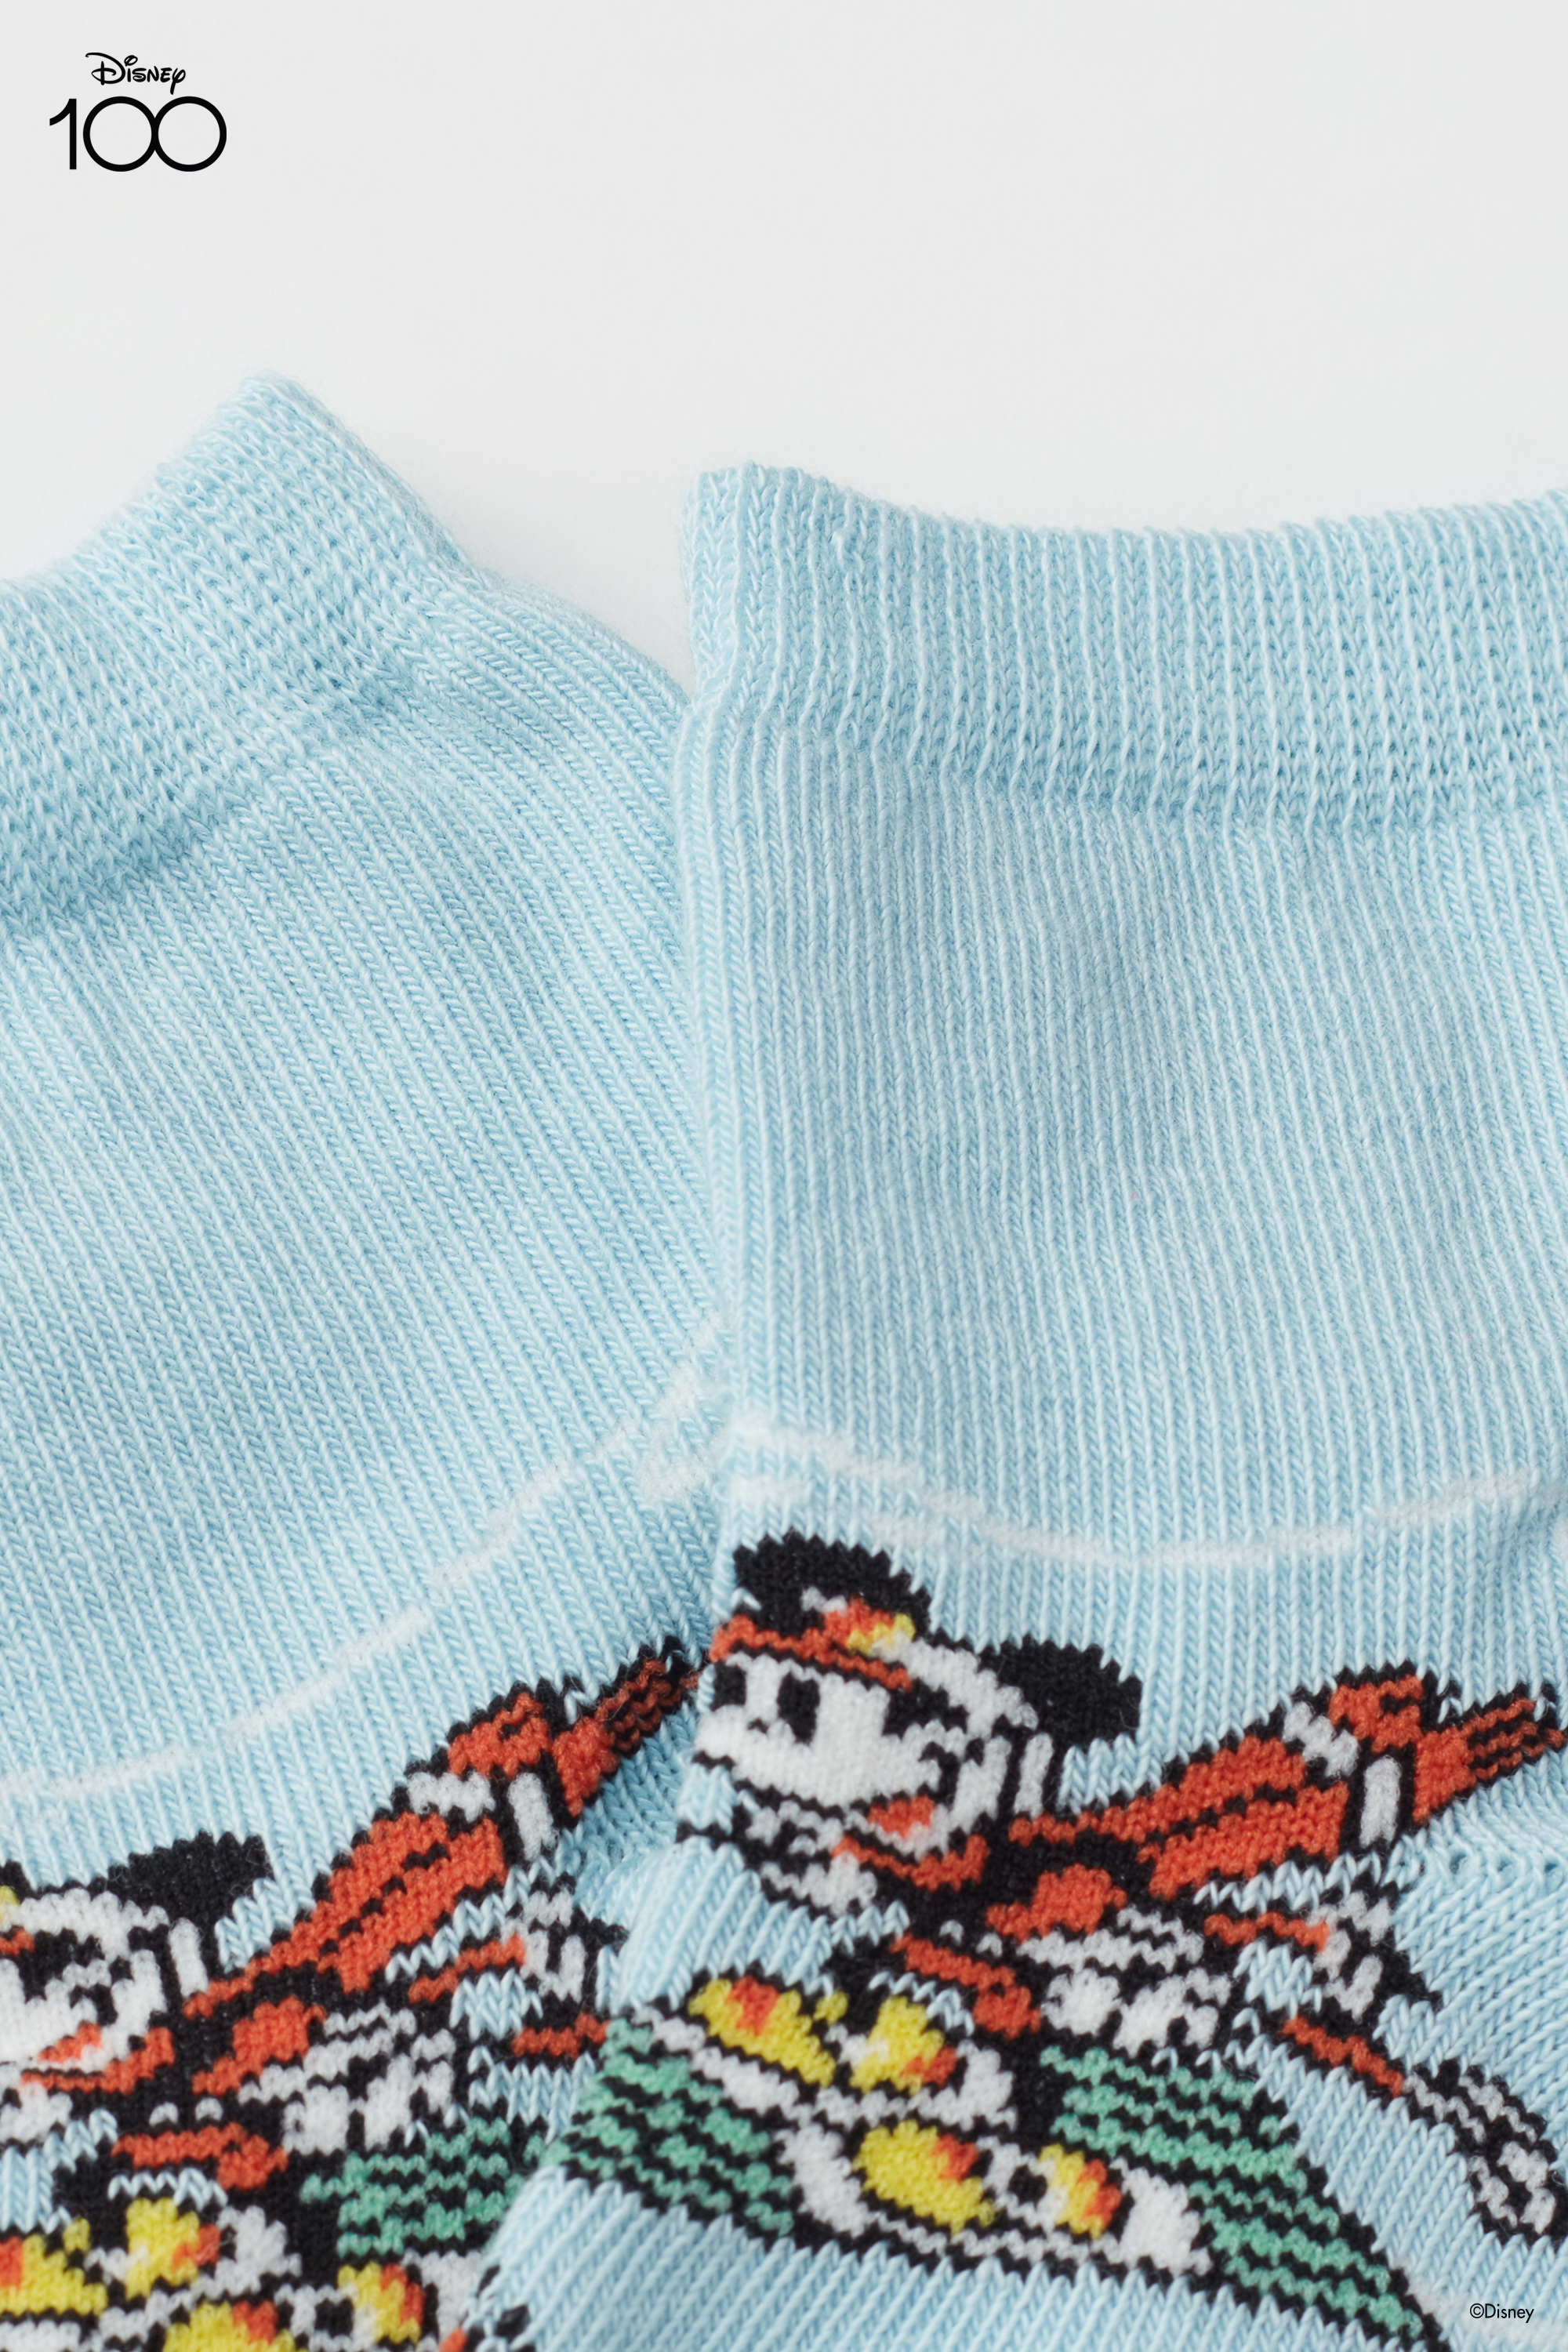 Boys’ Disney 100 Short Cotton Socks